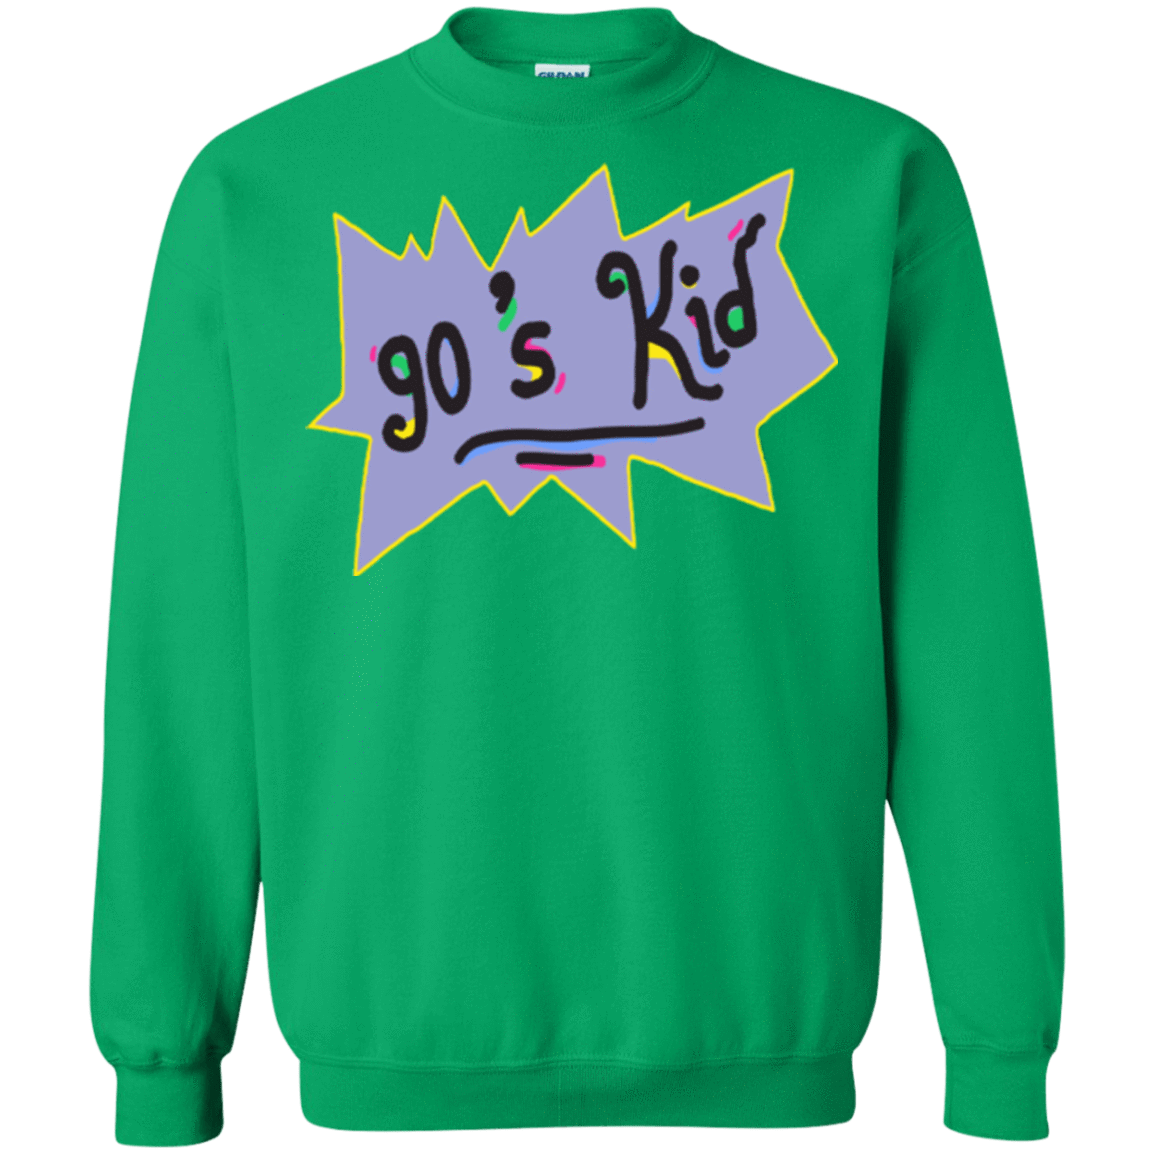 Sweatshirts Irish Green / Small 90's Kid Crewneck Sweatshirt